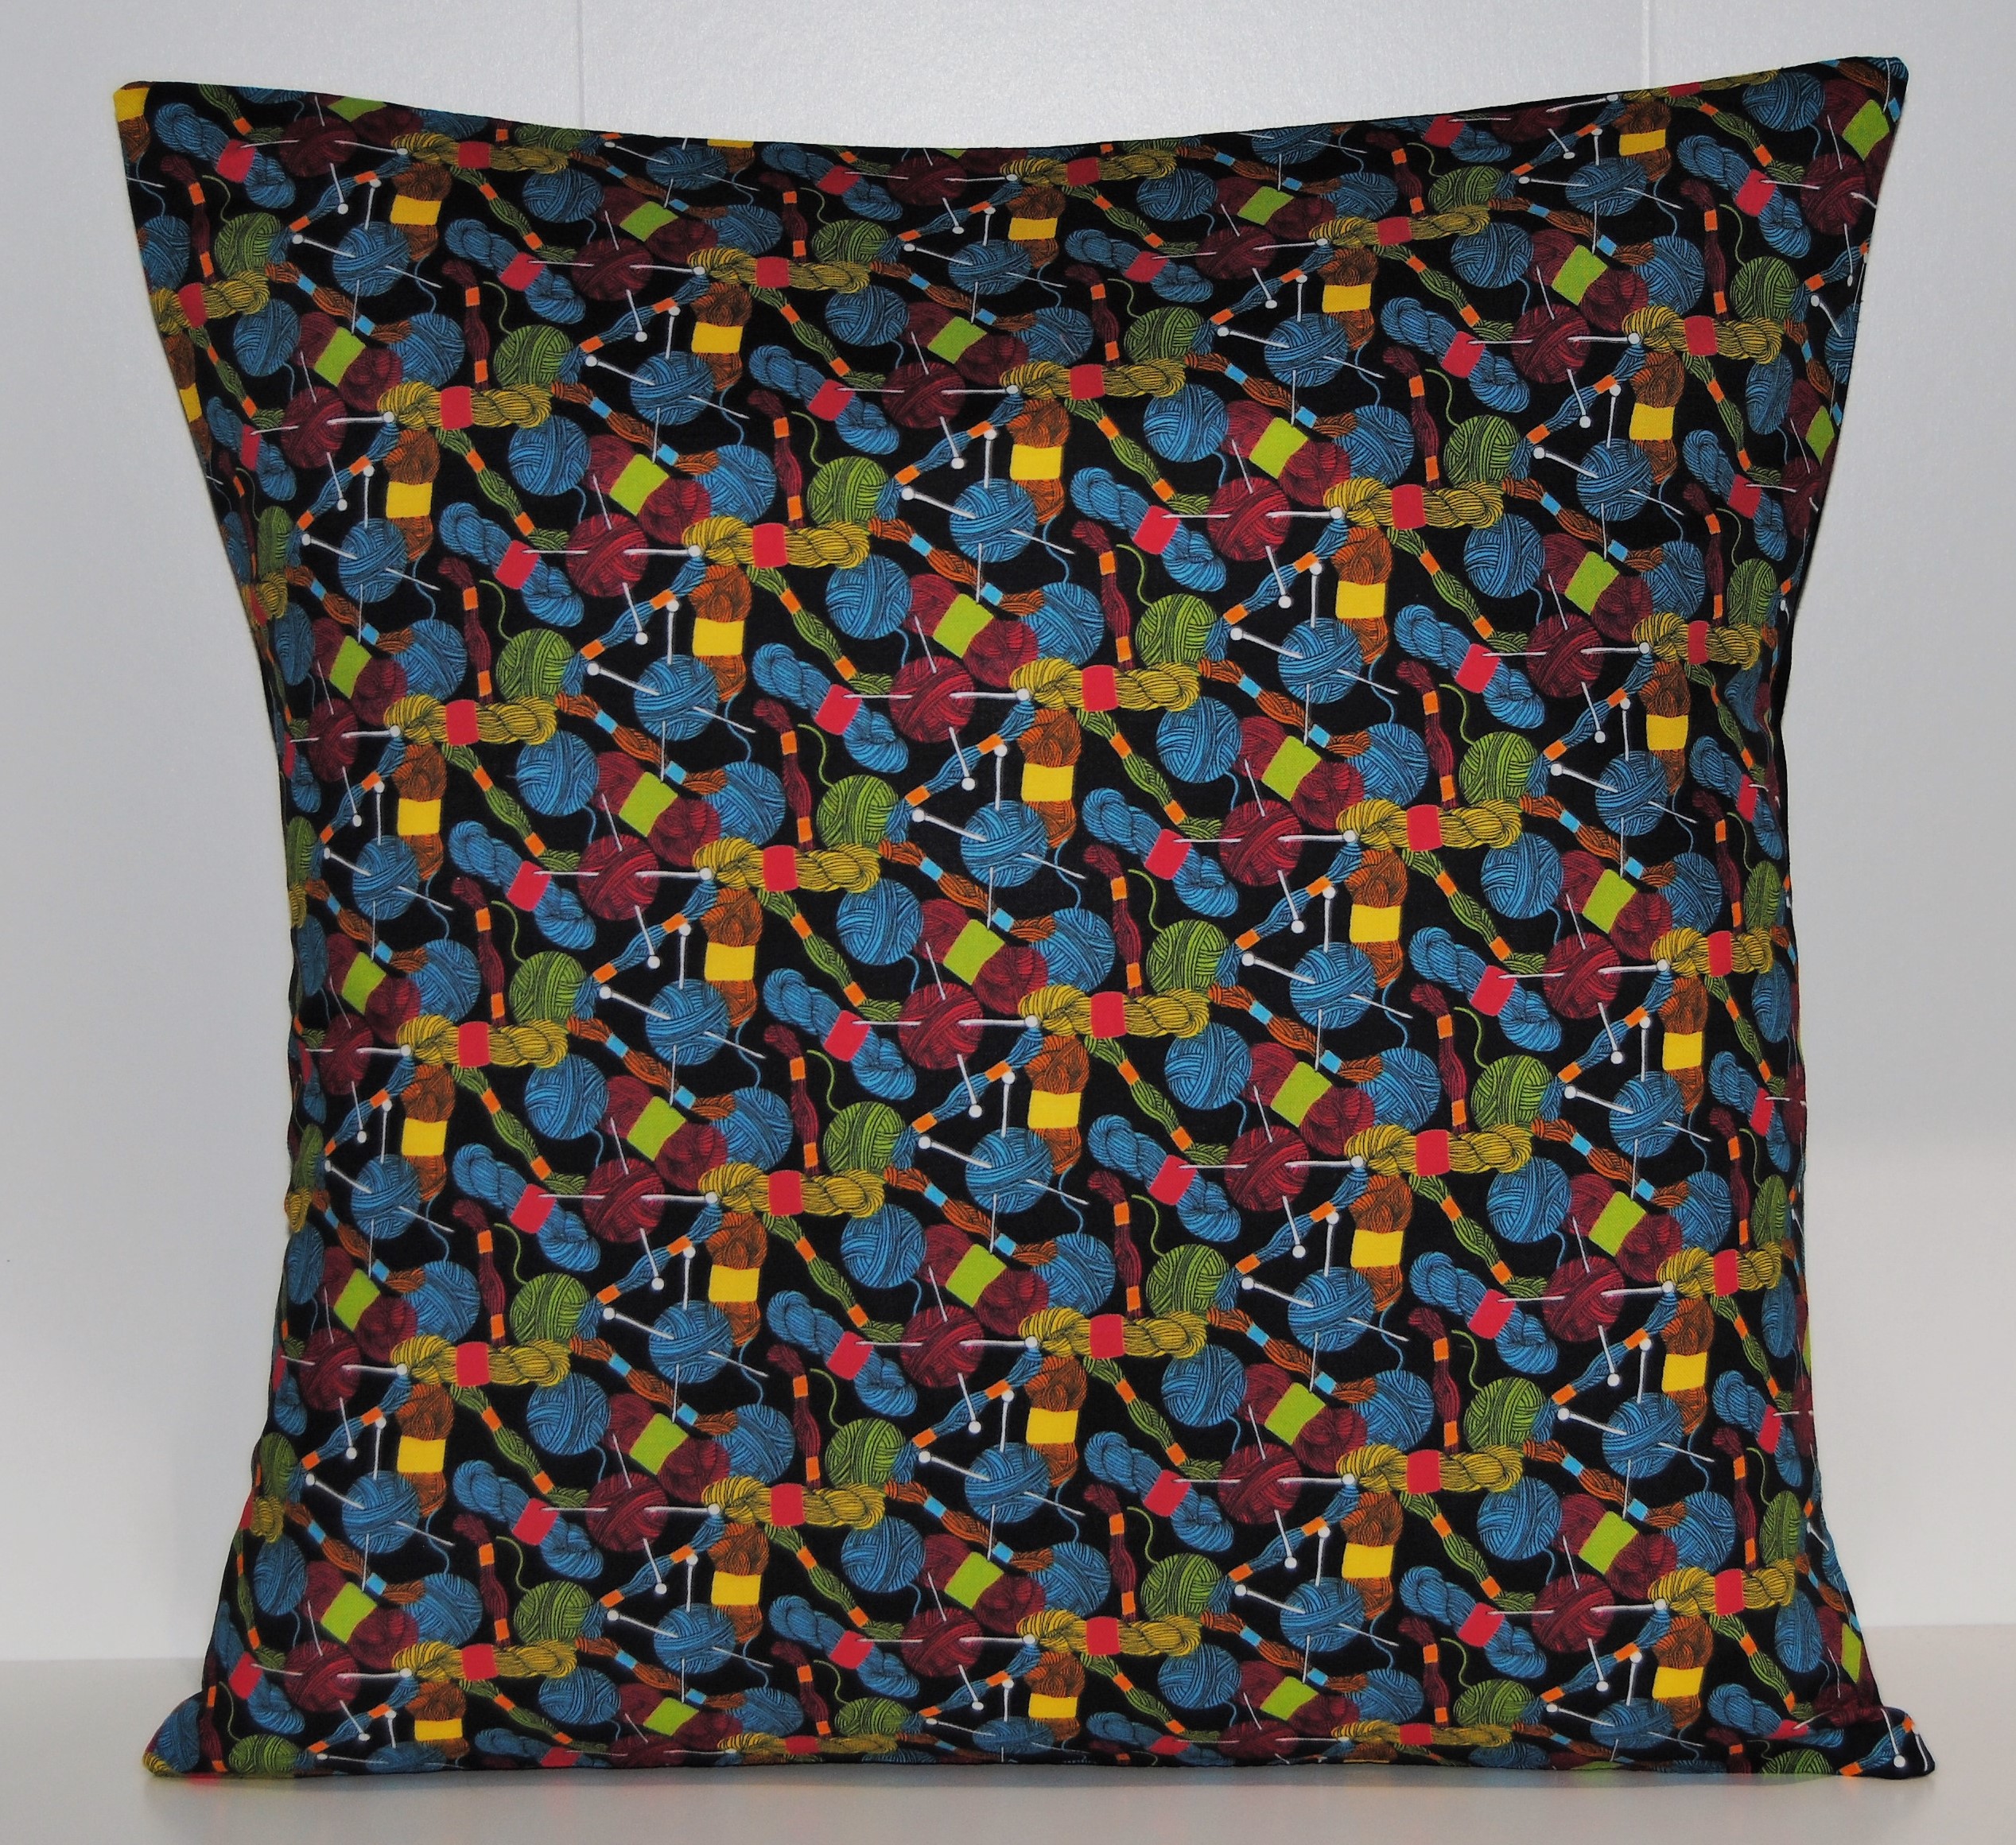 Knitting themed cushion